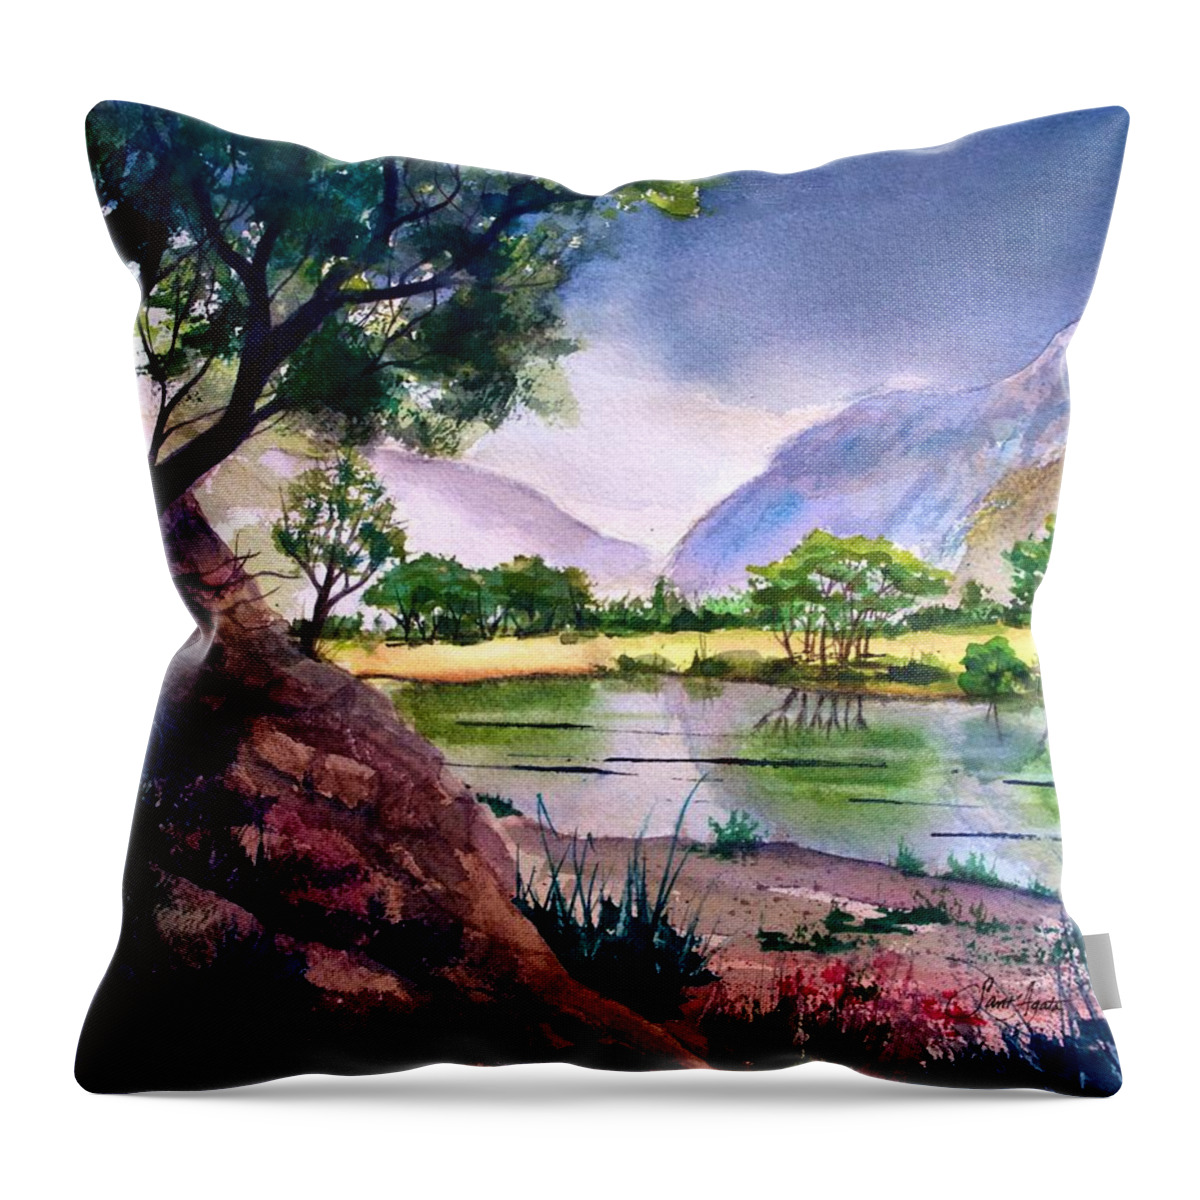 Mountains Throw Pillow featuring the painting Mountain Lake Memories by Frank SantAgata